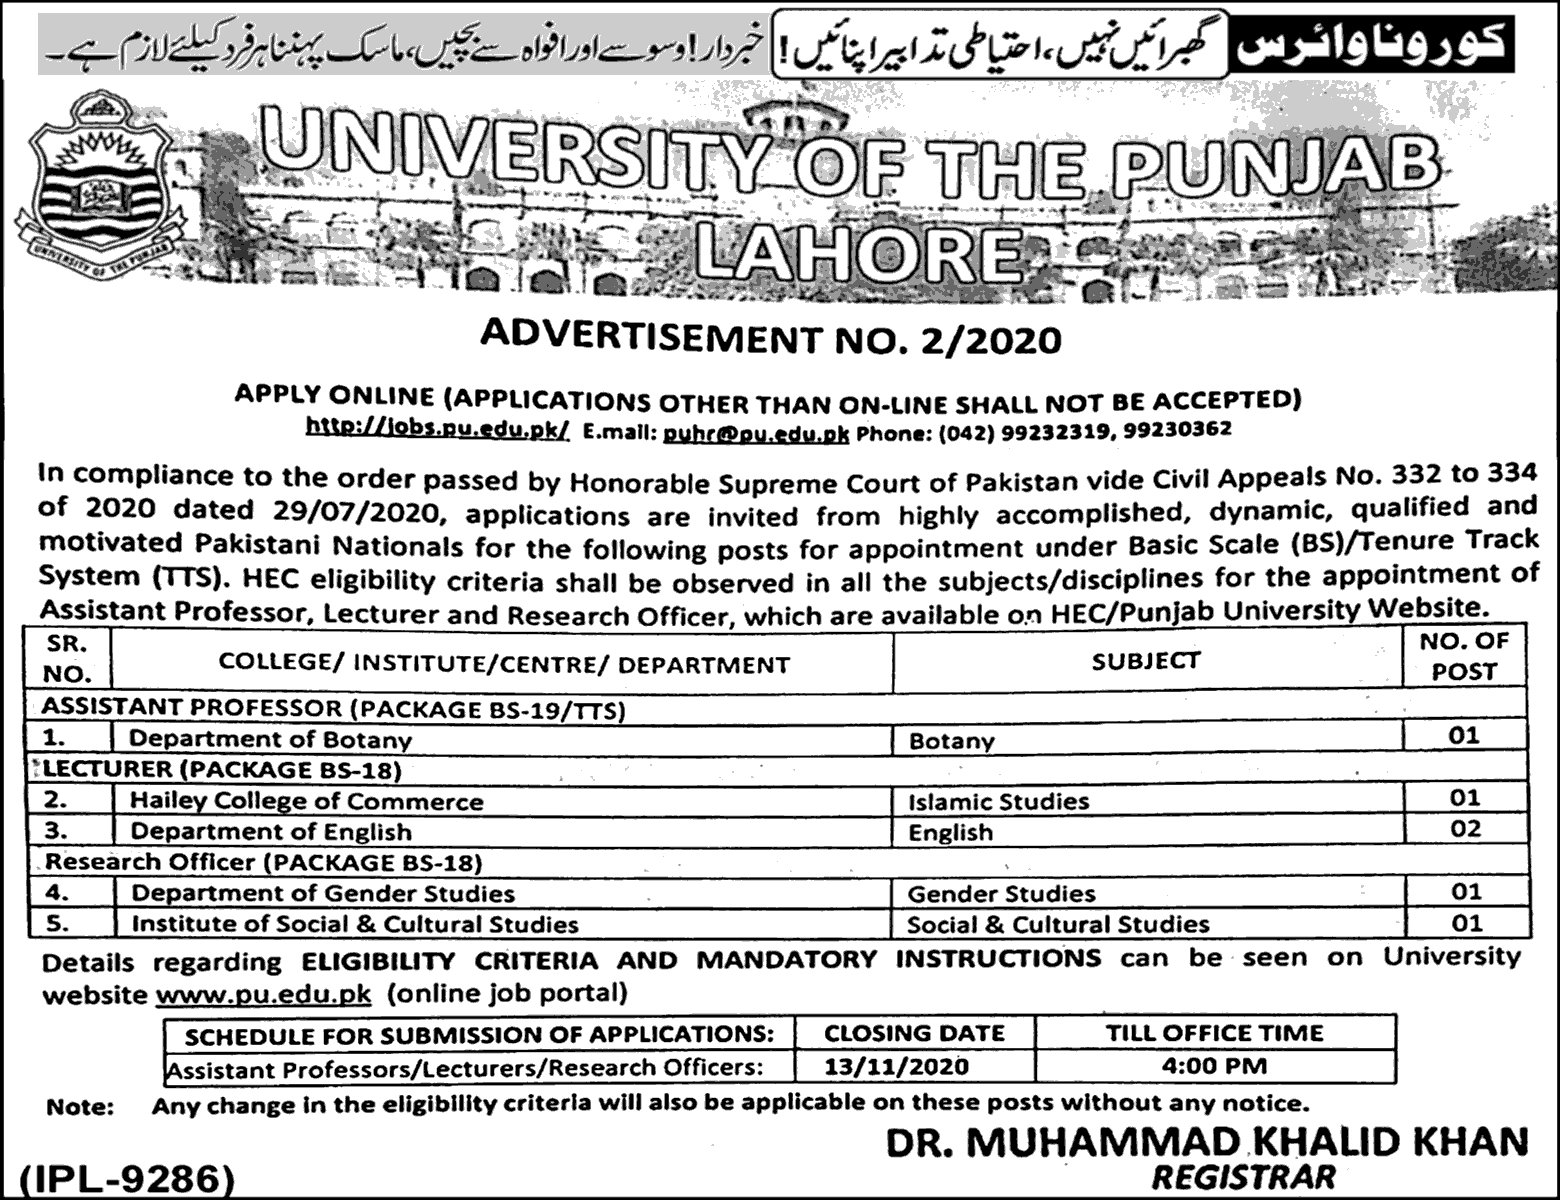 University of The Punjab Latest Jobs in Pakistan - Download Job Application Form - jobs.pu.edu.pk